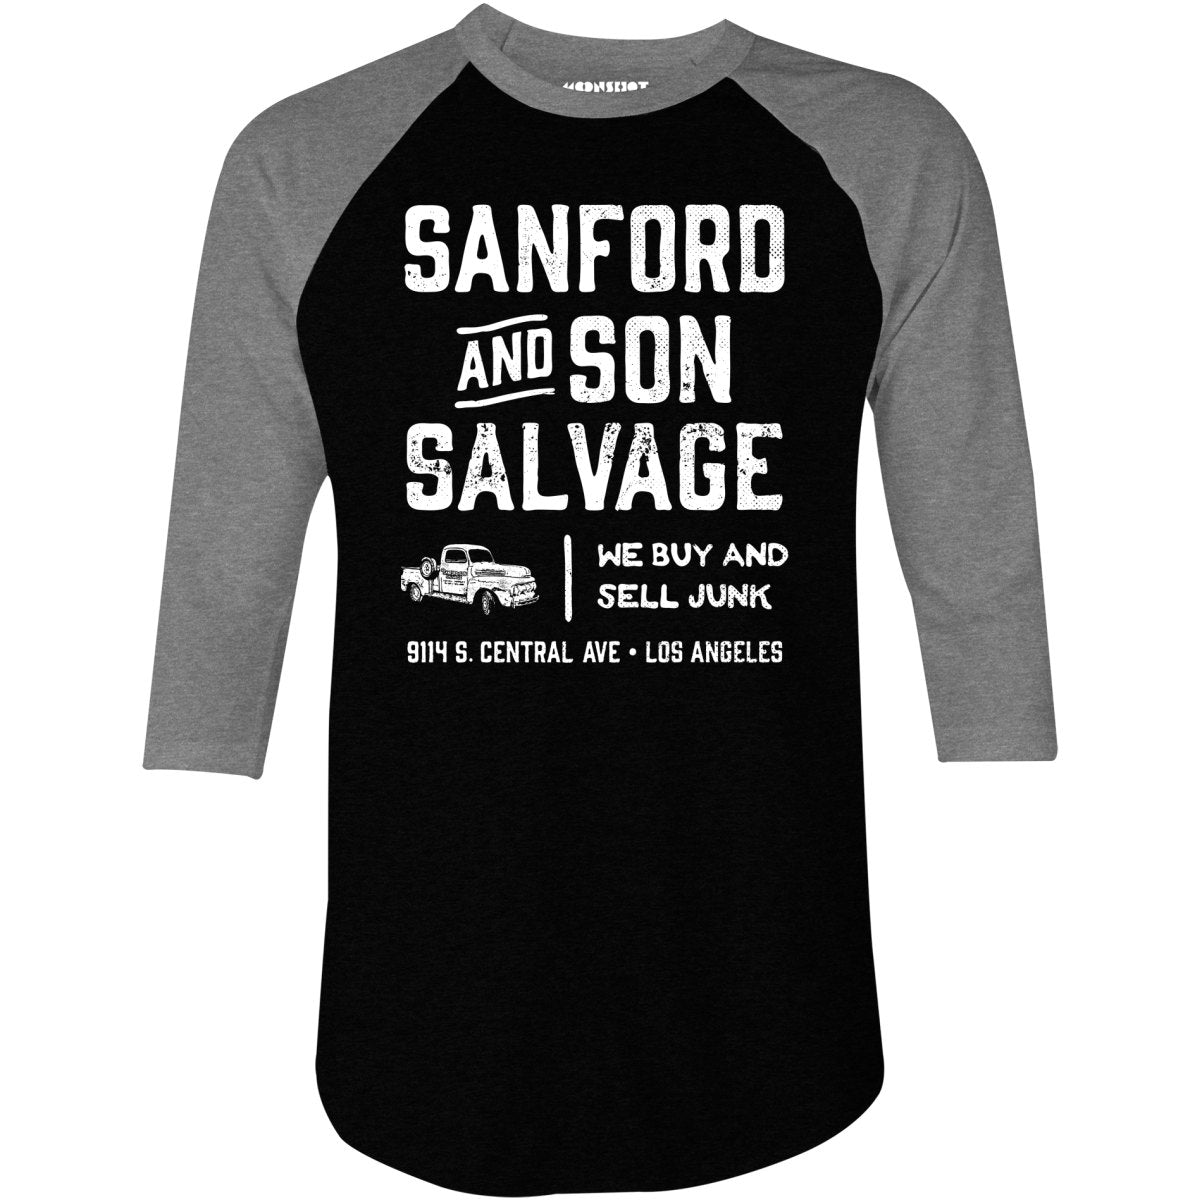 Sanford and Son Salvage - 3/4 Sleeve Raglan T-Shirt